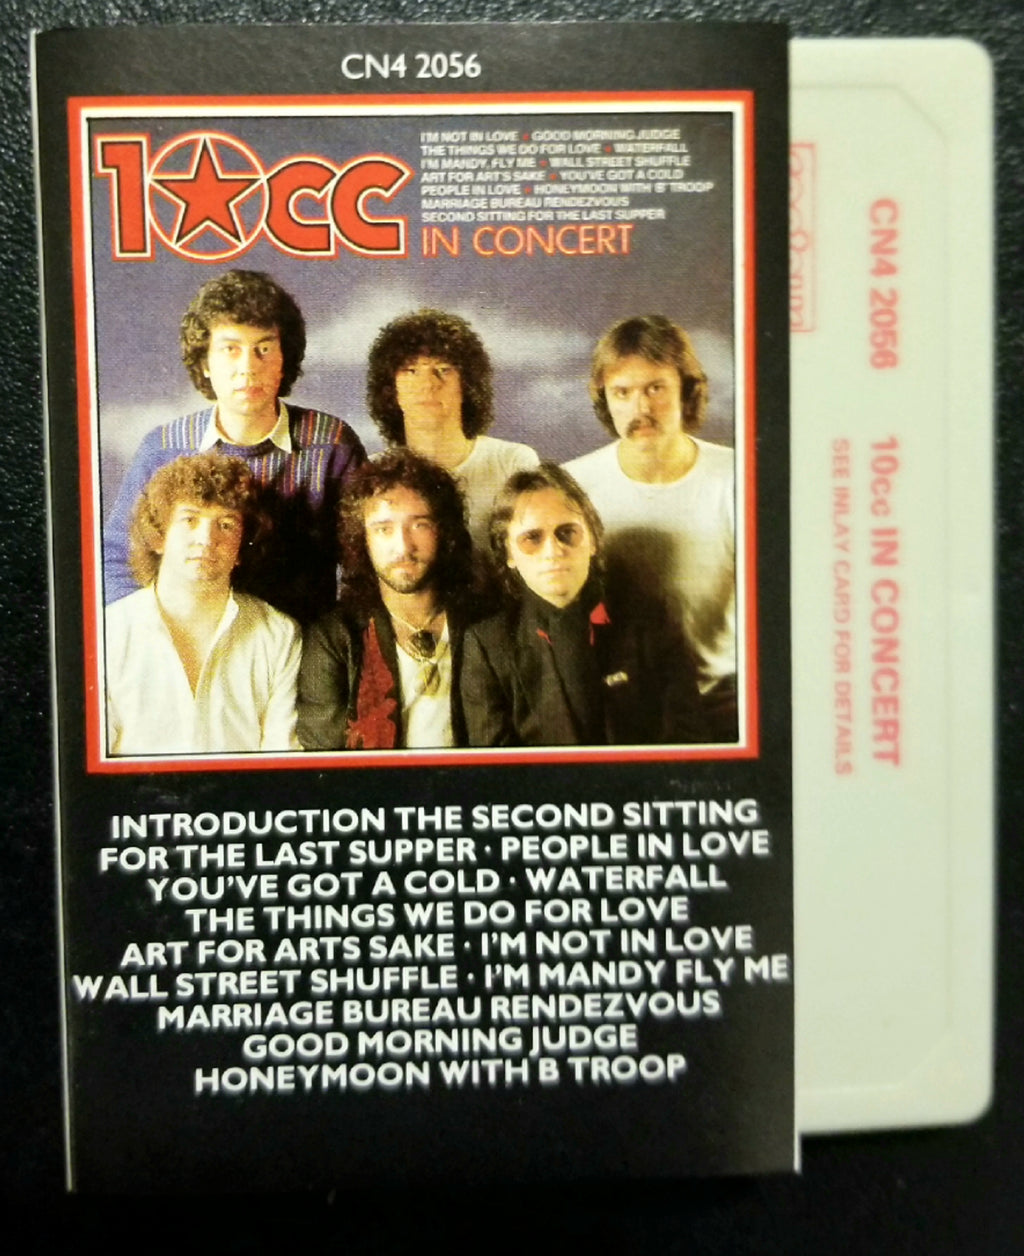 10CC in Concert Cassette